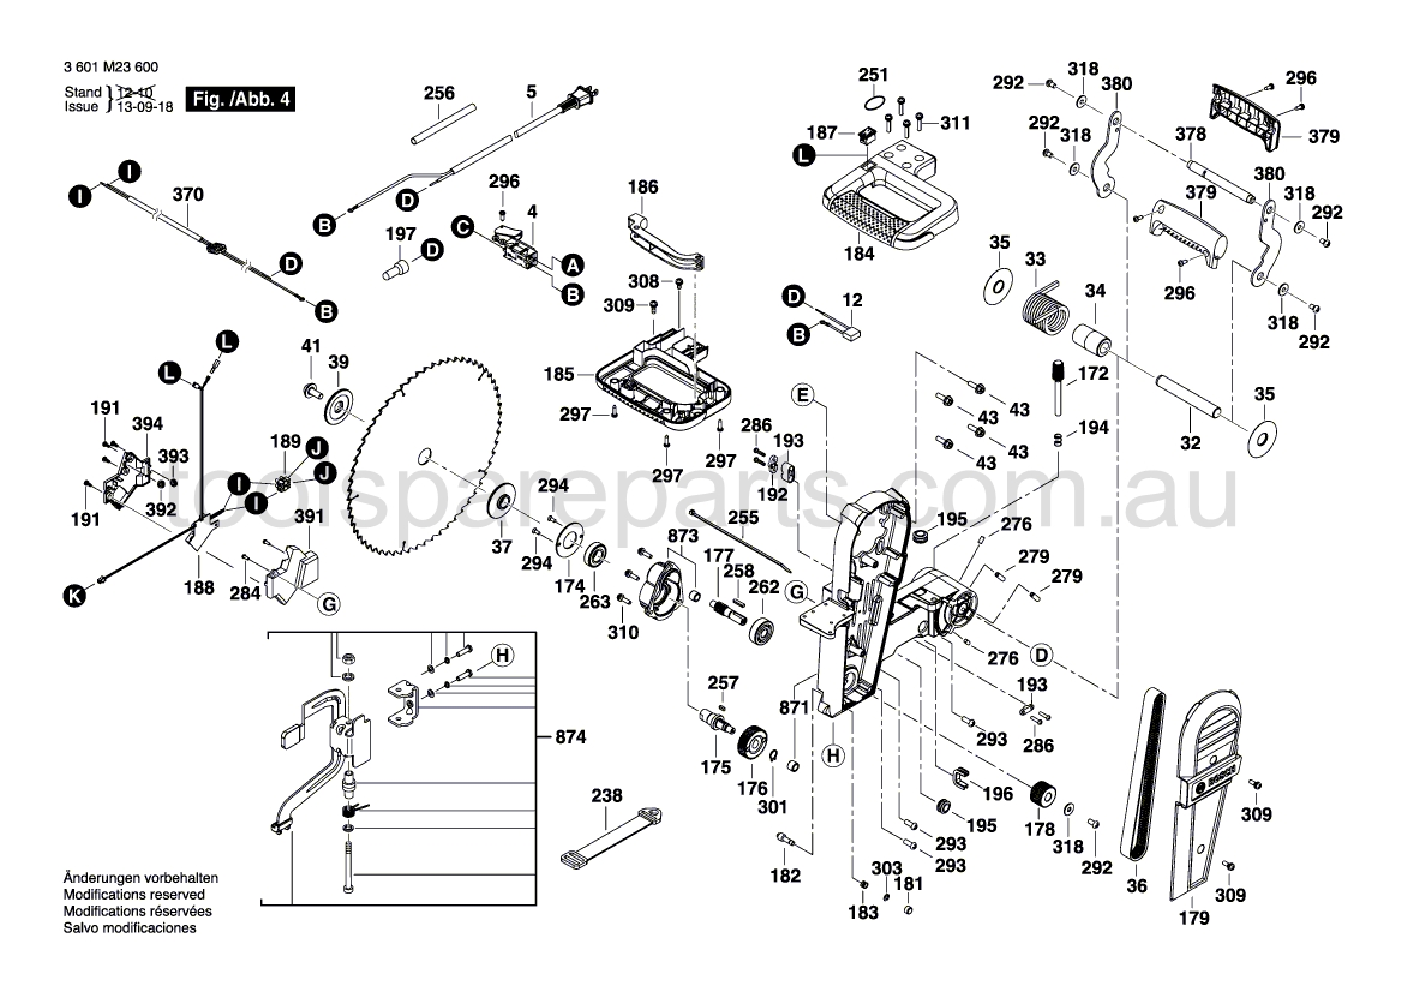 Bosch GCM 12 GDL 3601M23640  Diagram 4